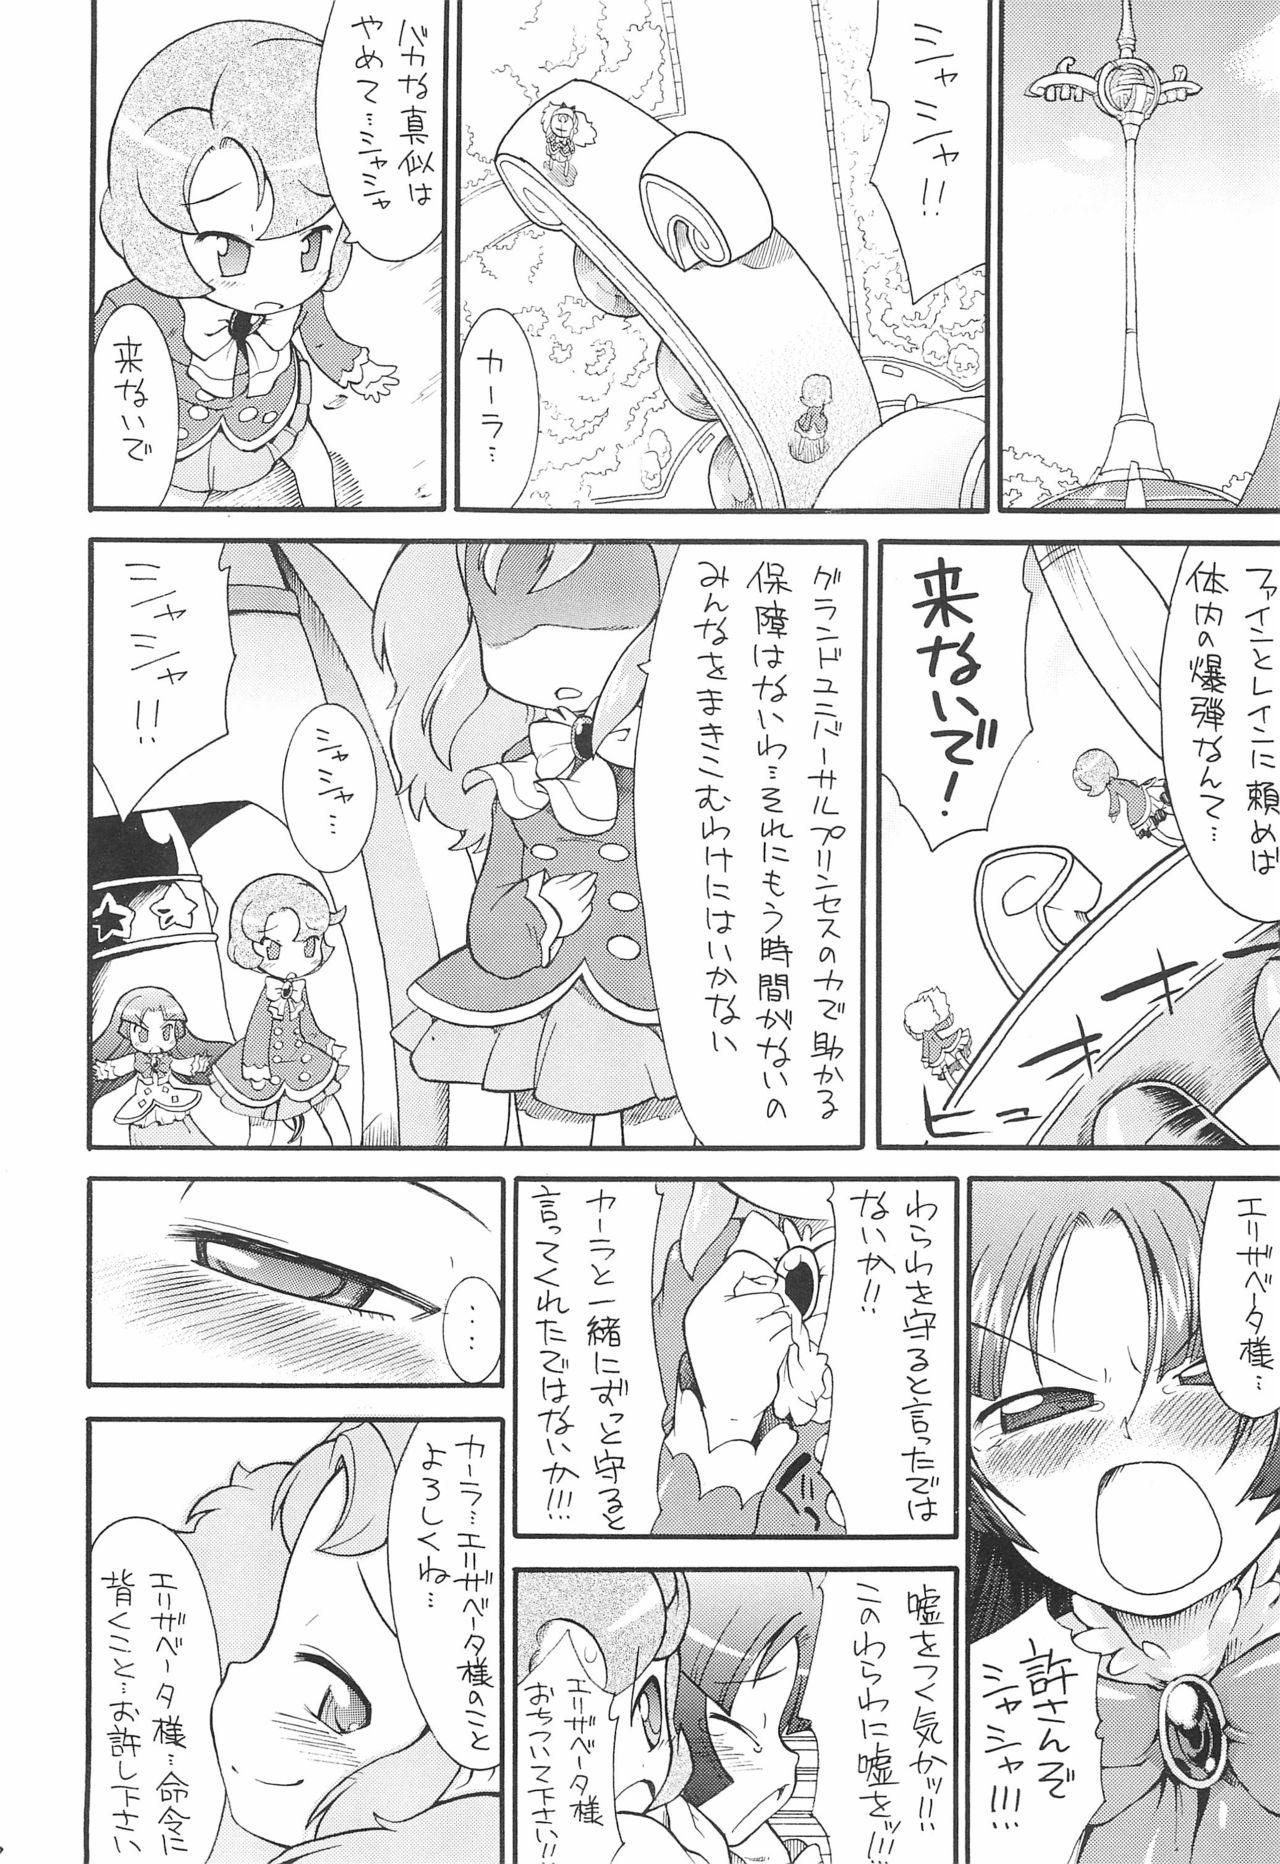 Spa Kodomo ja Neenda Princess nanda! 6 - Fushigiboshi no futagohime | twin princesses of the wonder planet Breast - Page 6